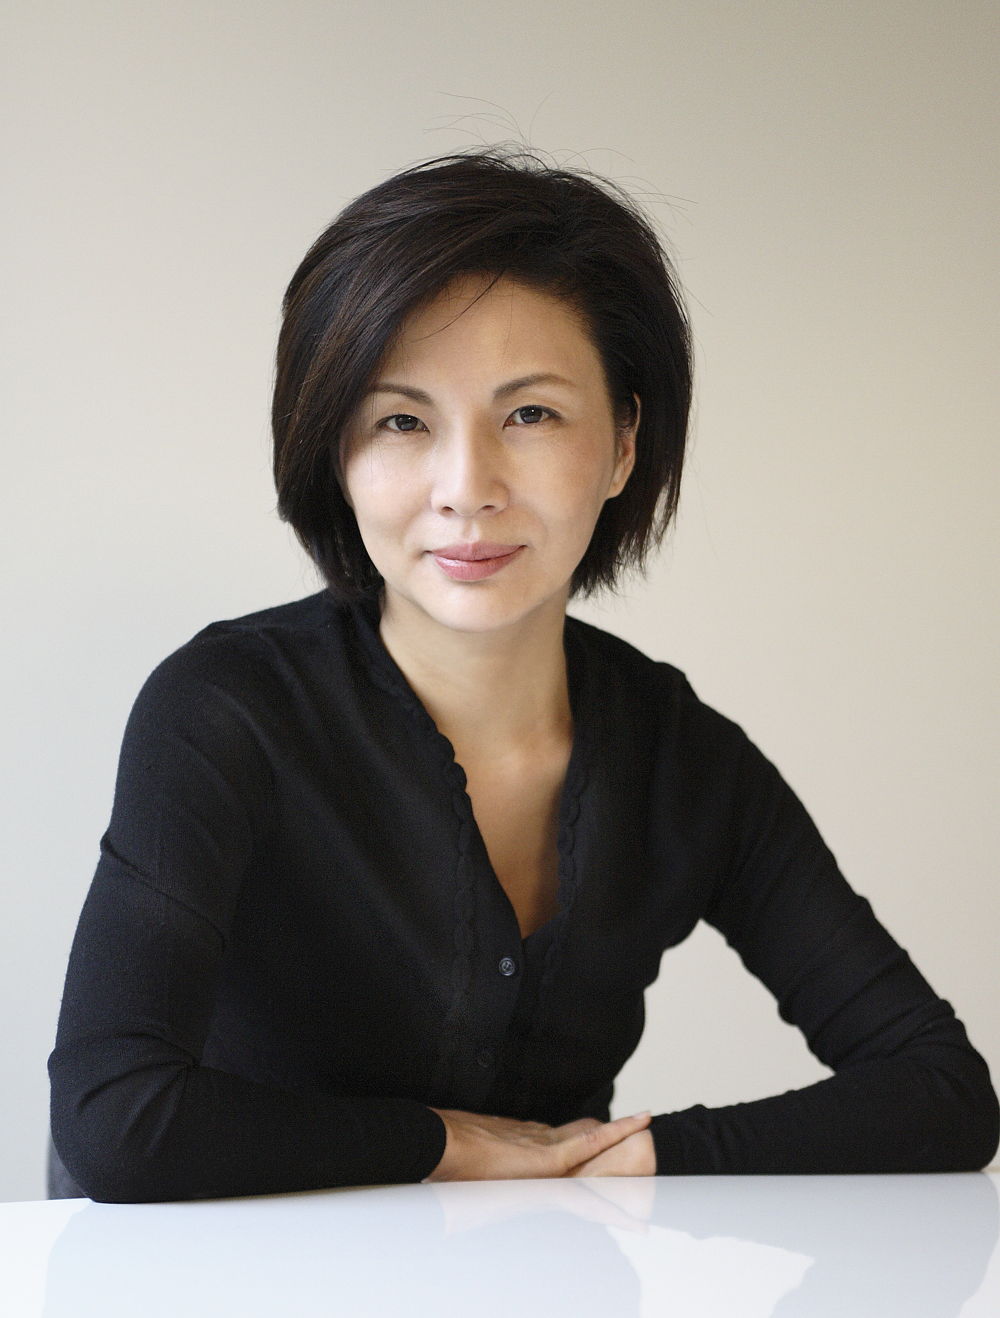 Ms. Izumi Ogino